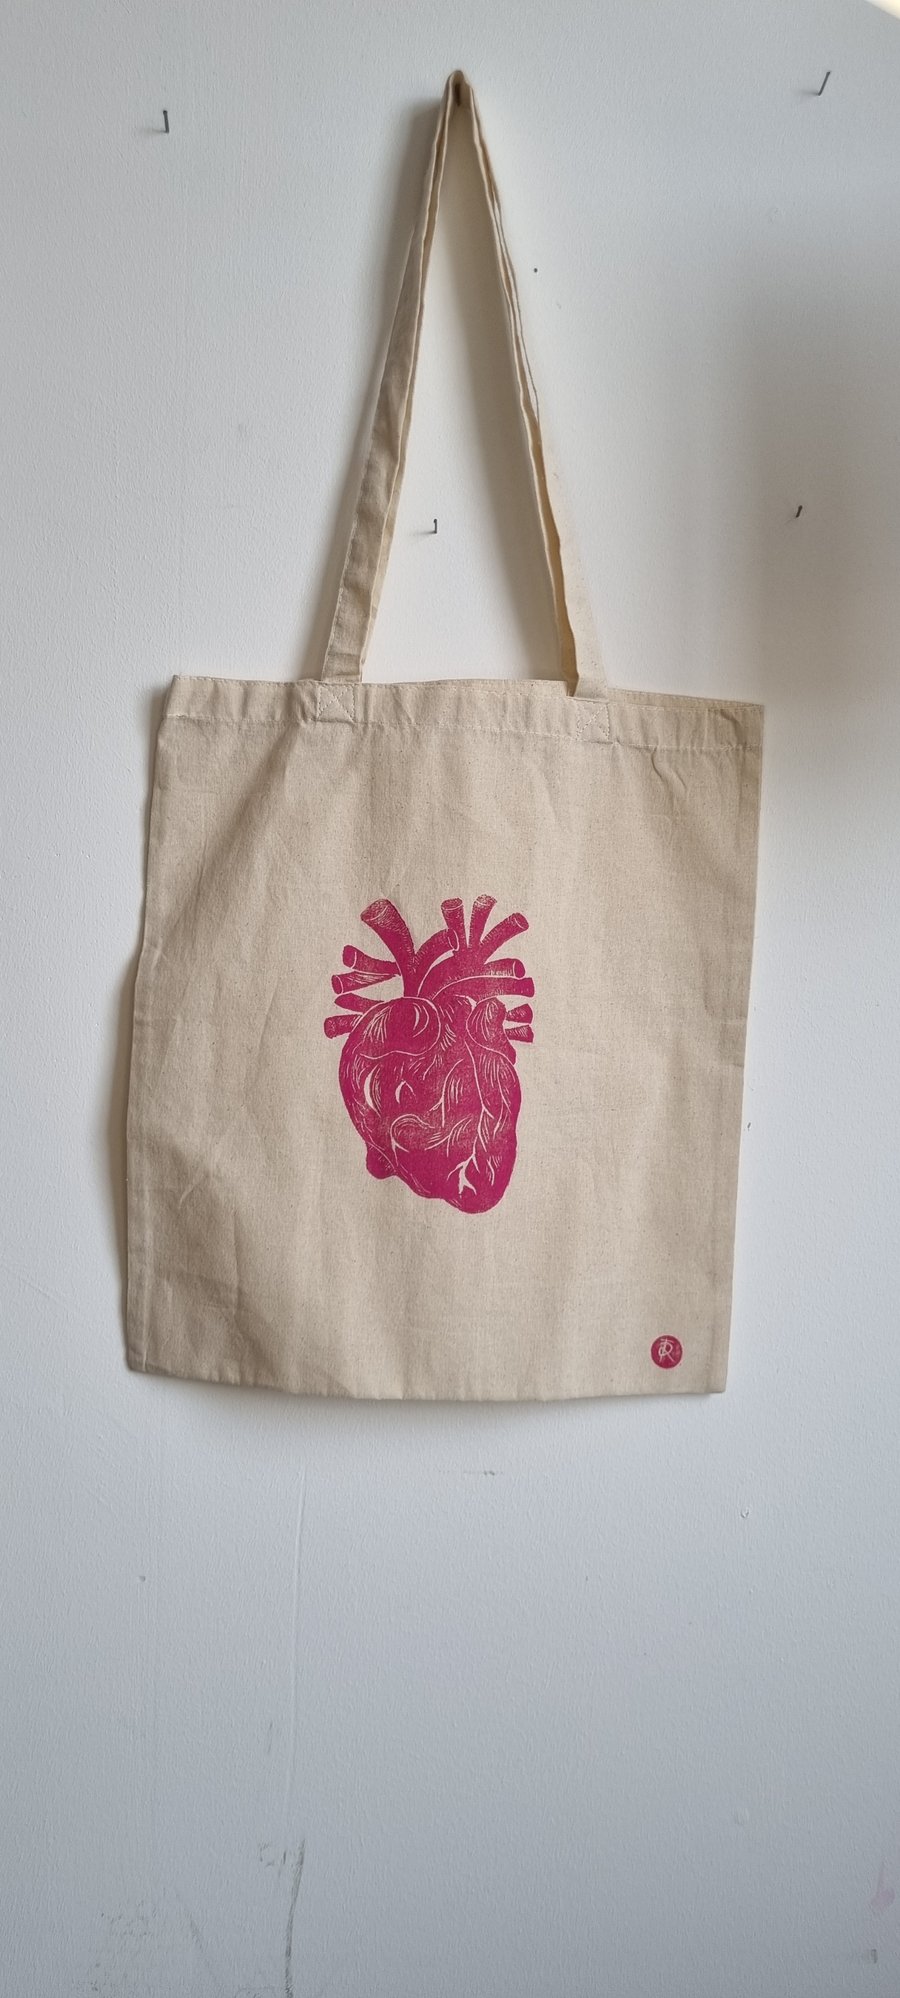 Heart print tote bag 